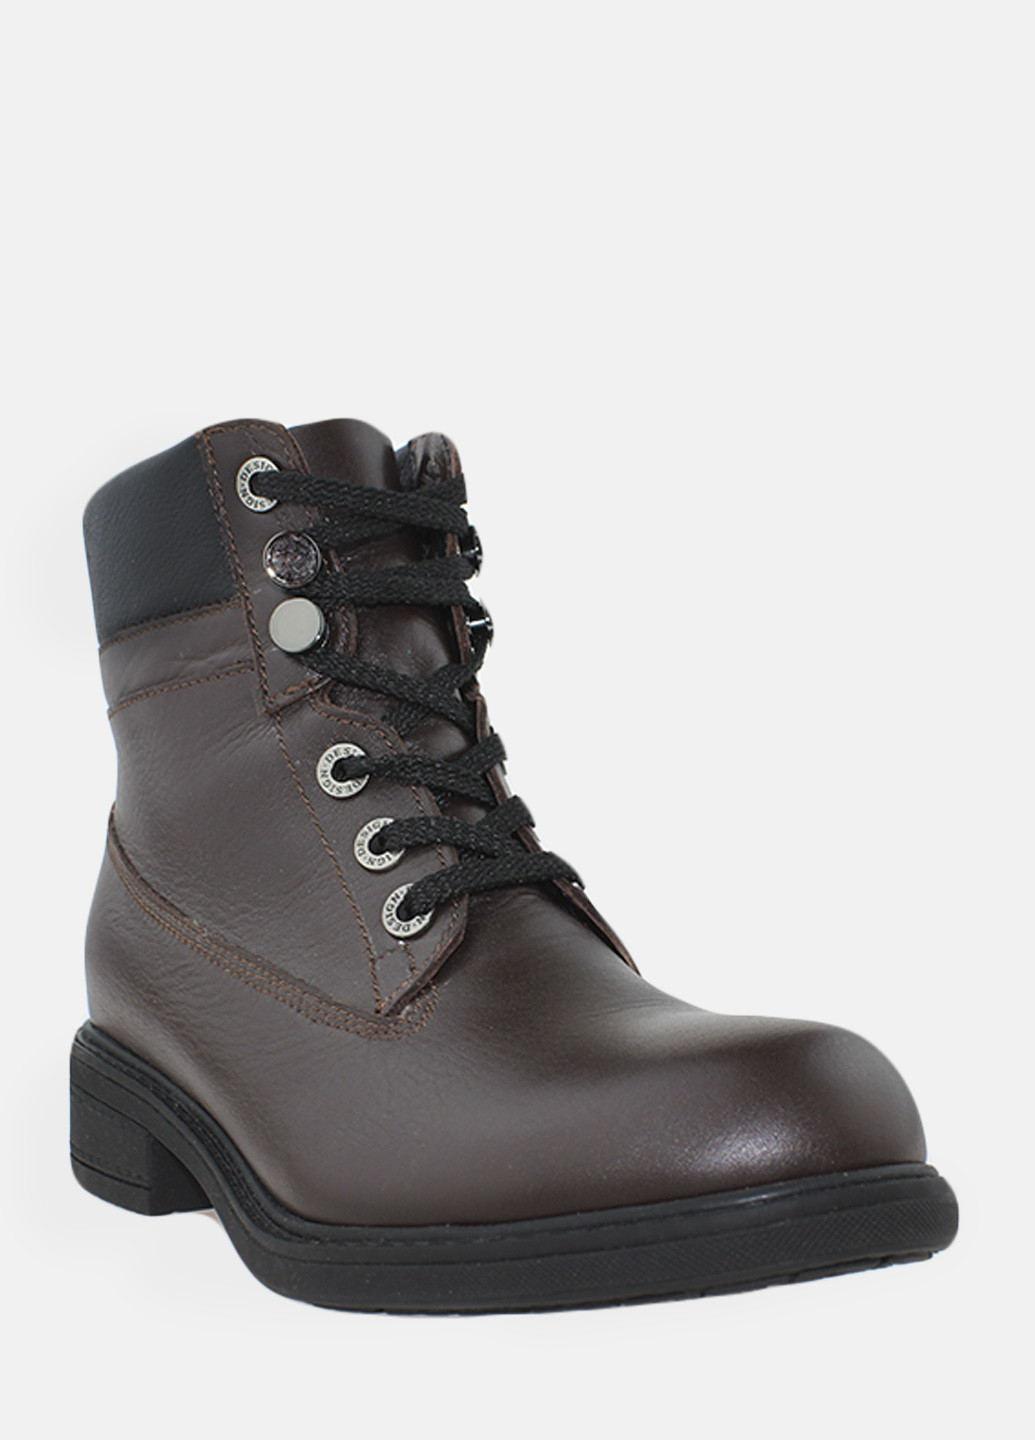 Зимние ботинки rp705 коричневый Passati